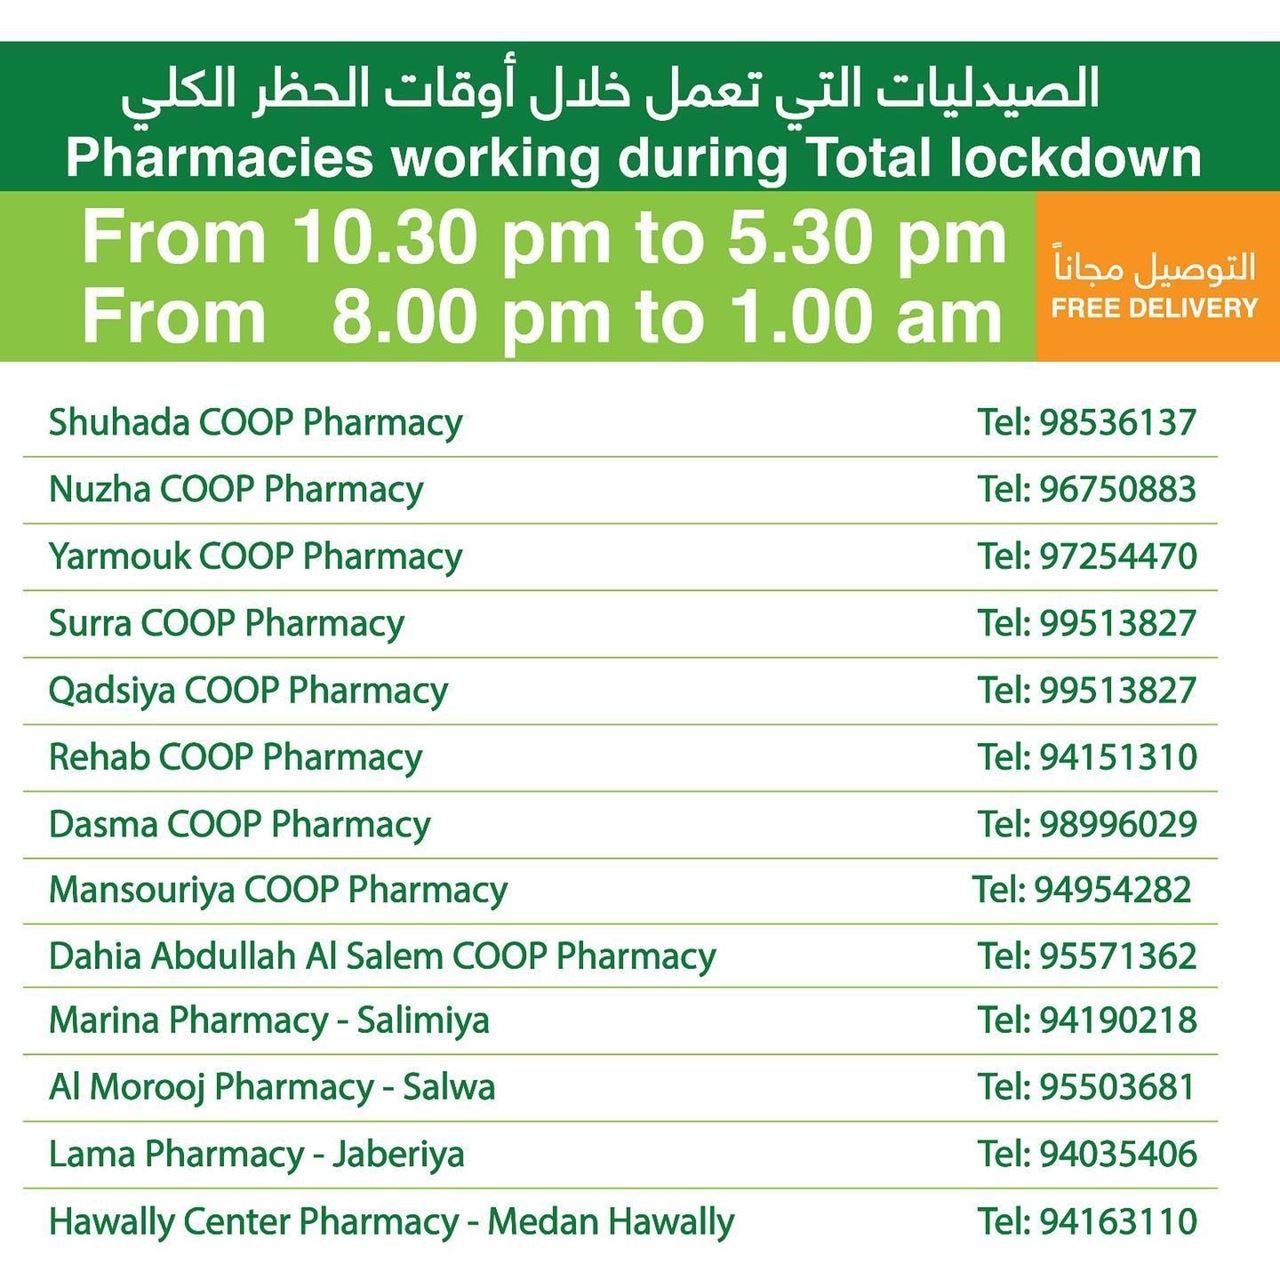 Al-Mutawa Pharmacies Operating during the Full Curfew